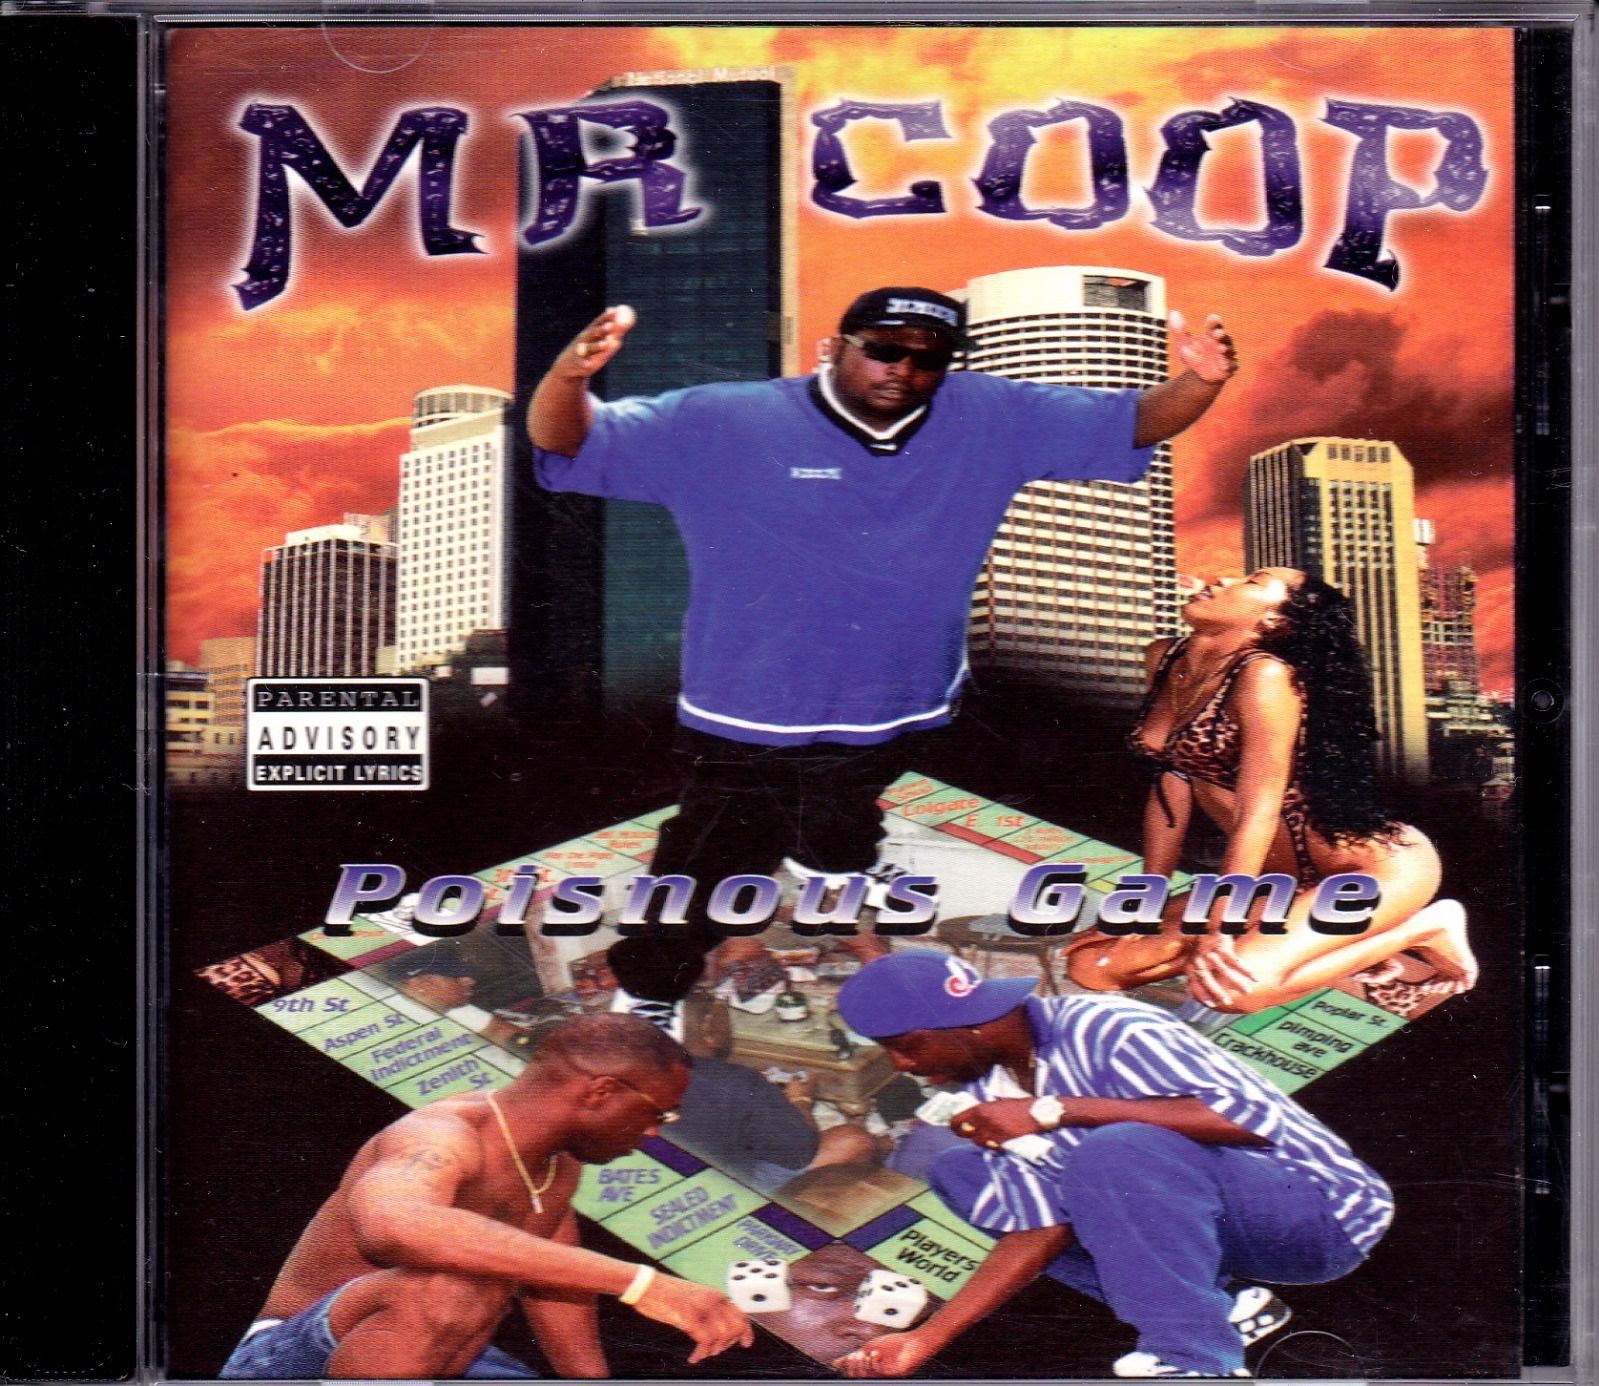 Mr. Coop (Fulton Entertainment) in Lubbock | Rap - The Good Ol'Dayz